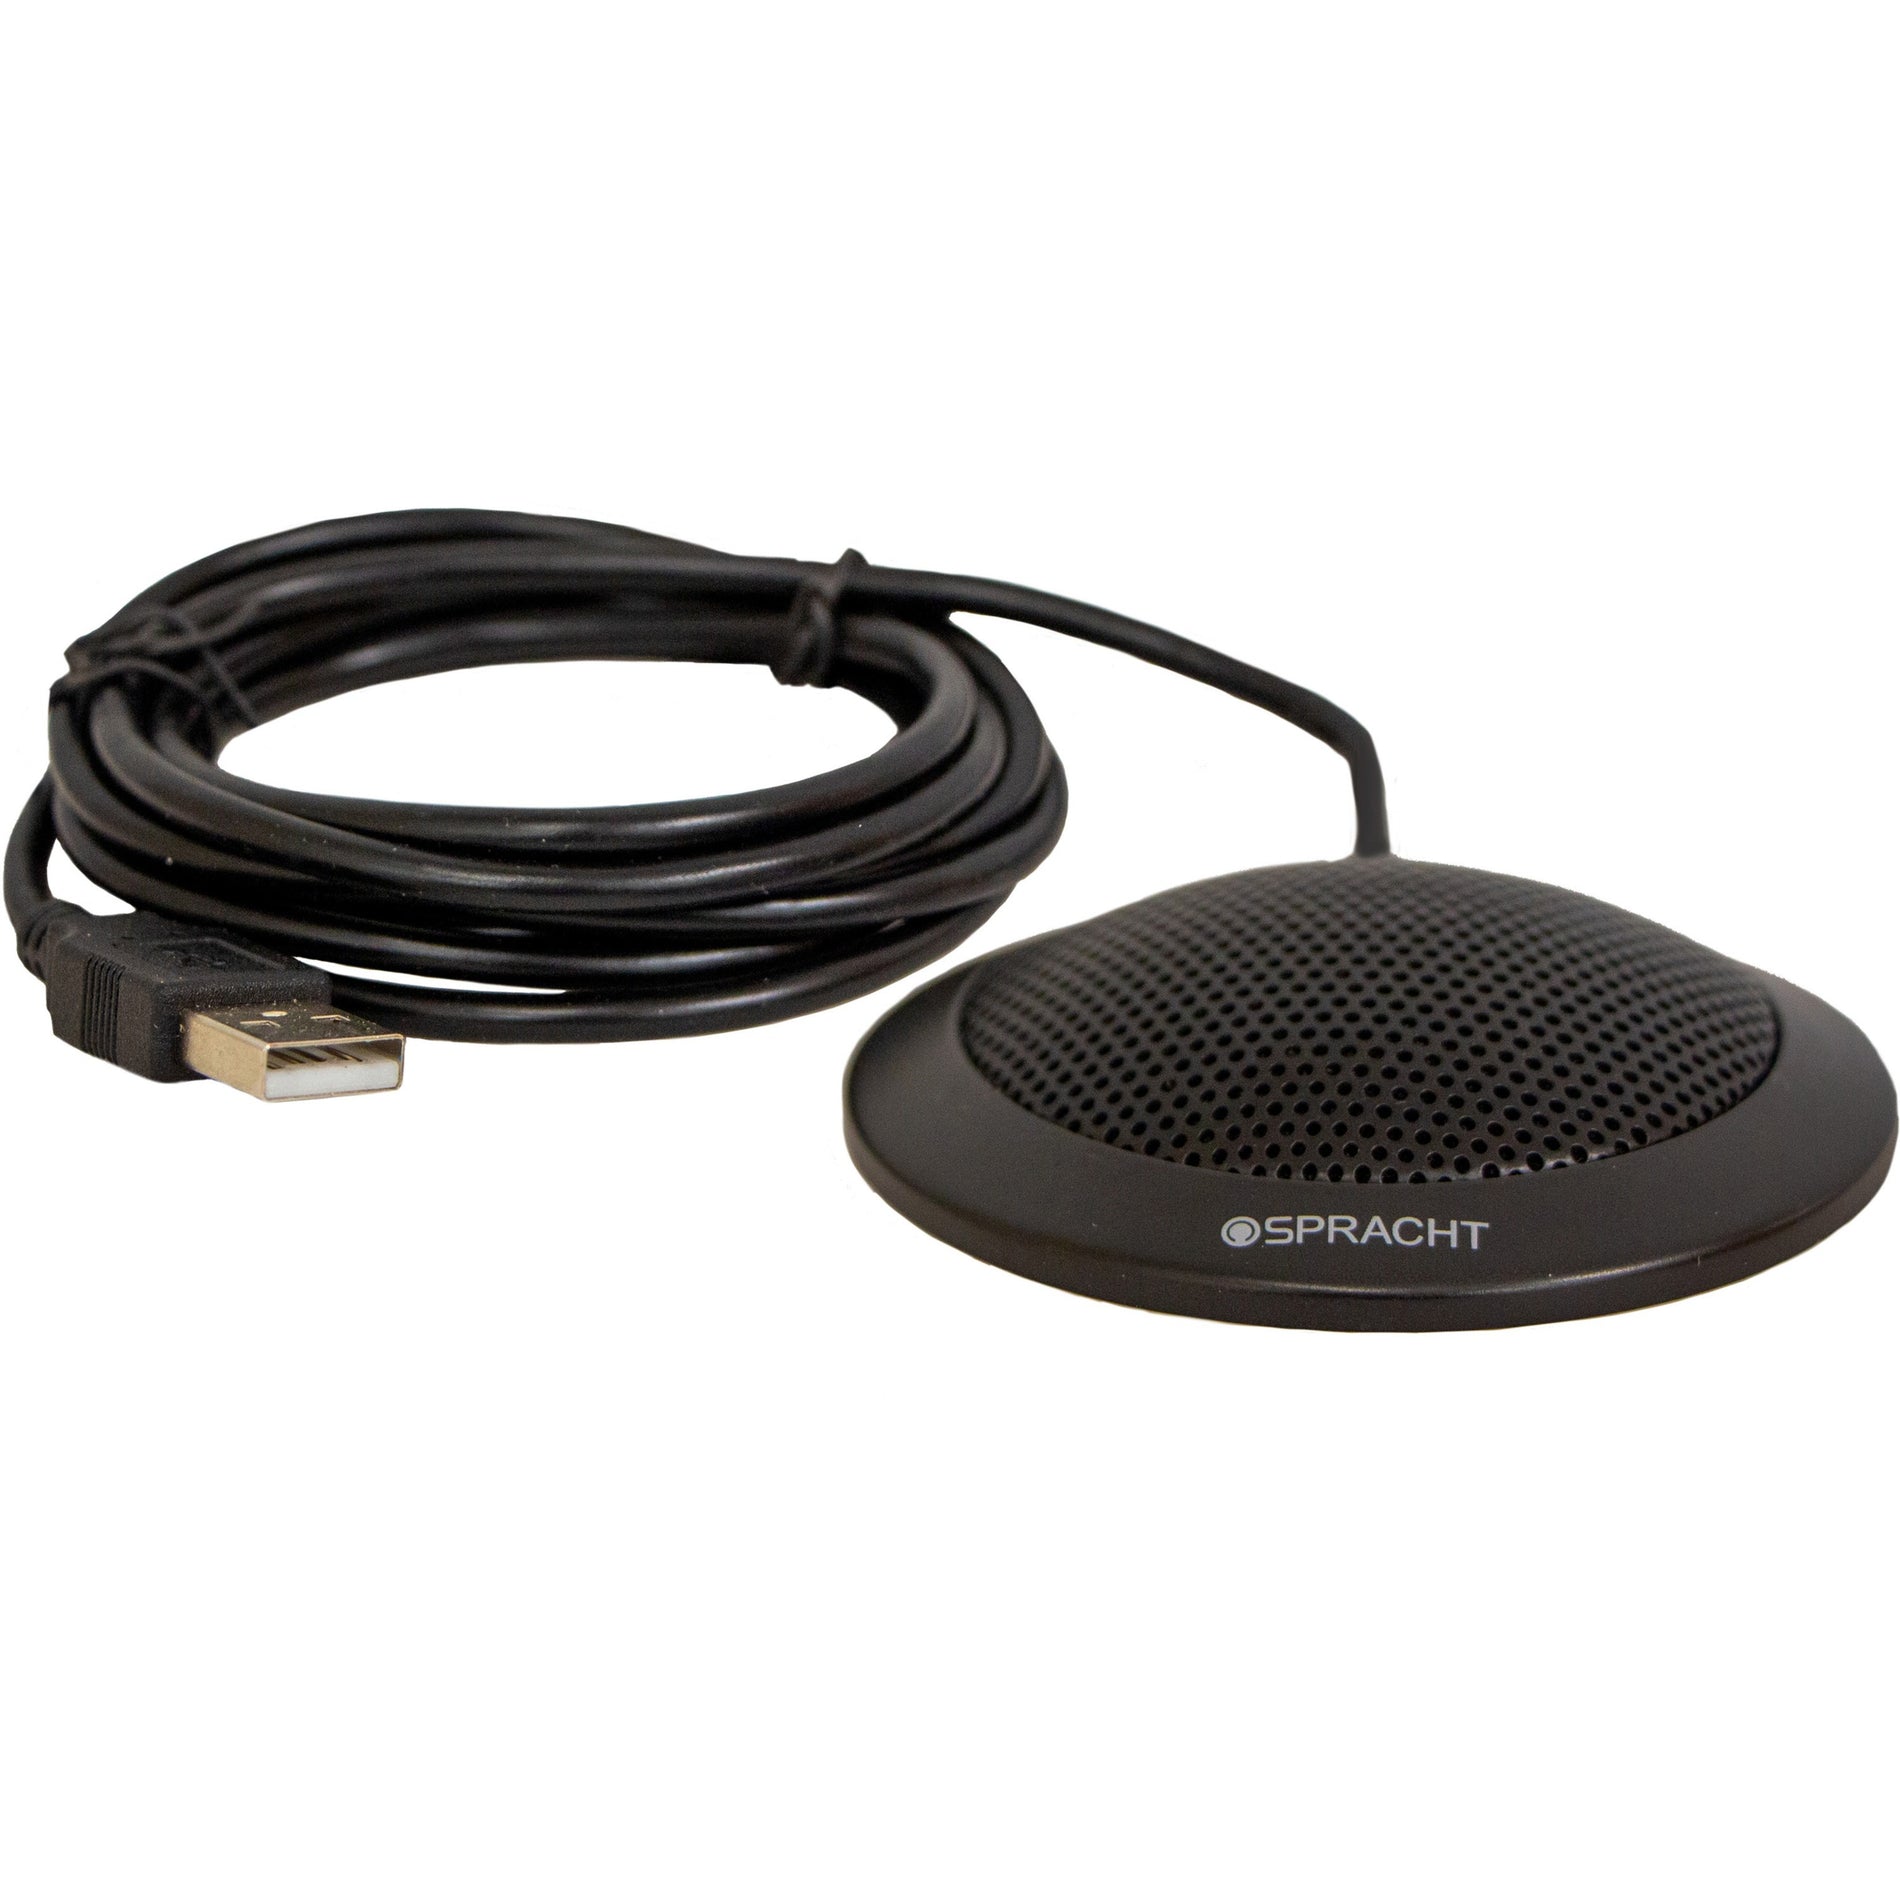 Spracht MIC-2010 Aura USB Mic Digital USB Microphone, Omni-directional, -47 dB Sensitivity, USB 2.0 Interface